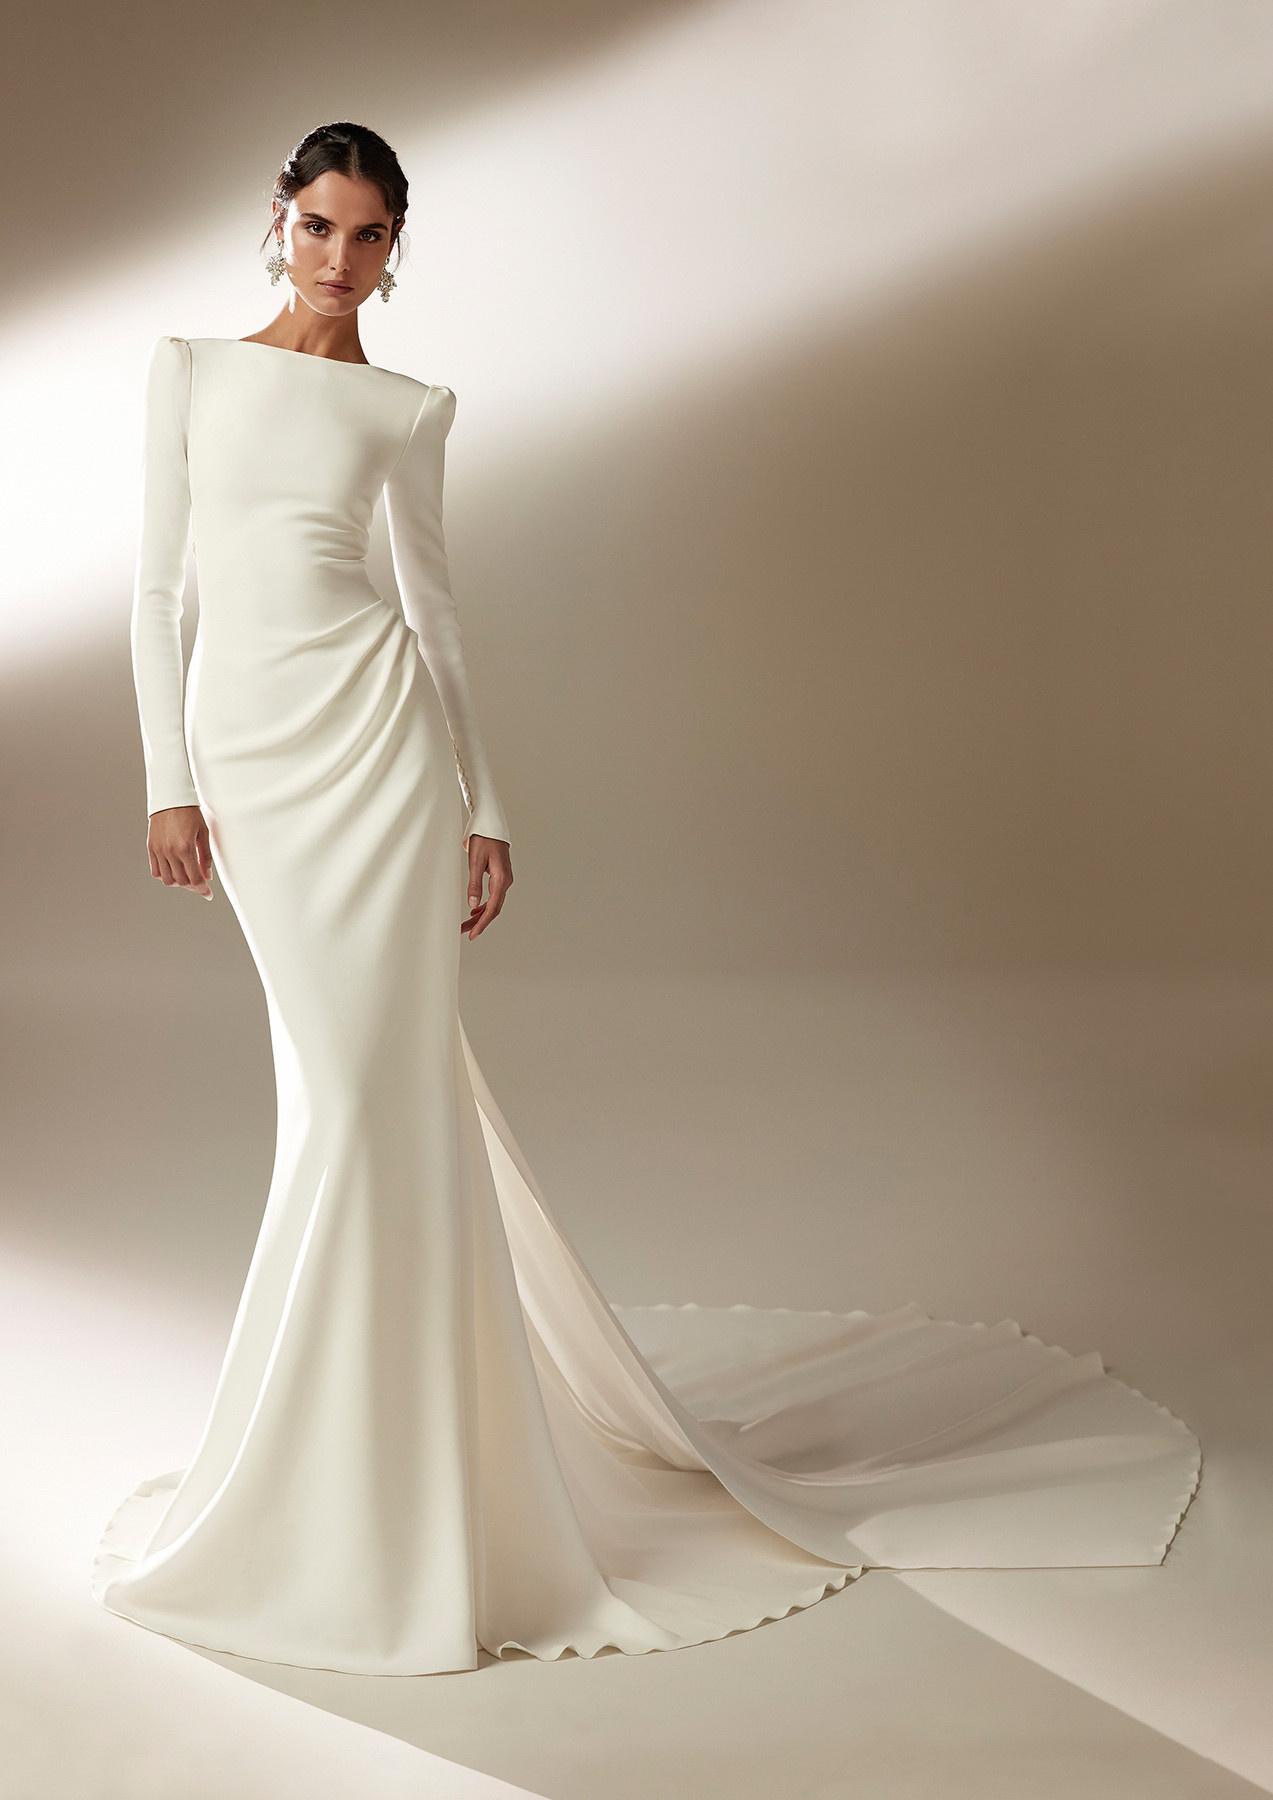 White long sleeve wedding dress for older brides